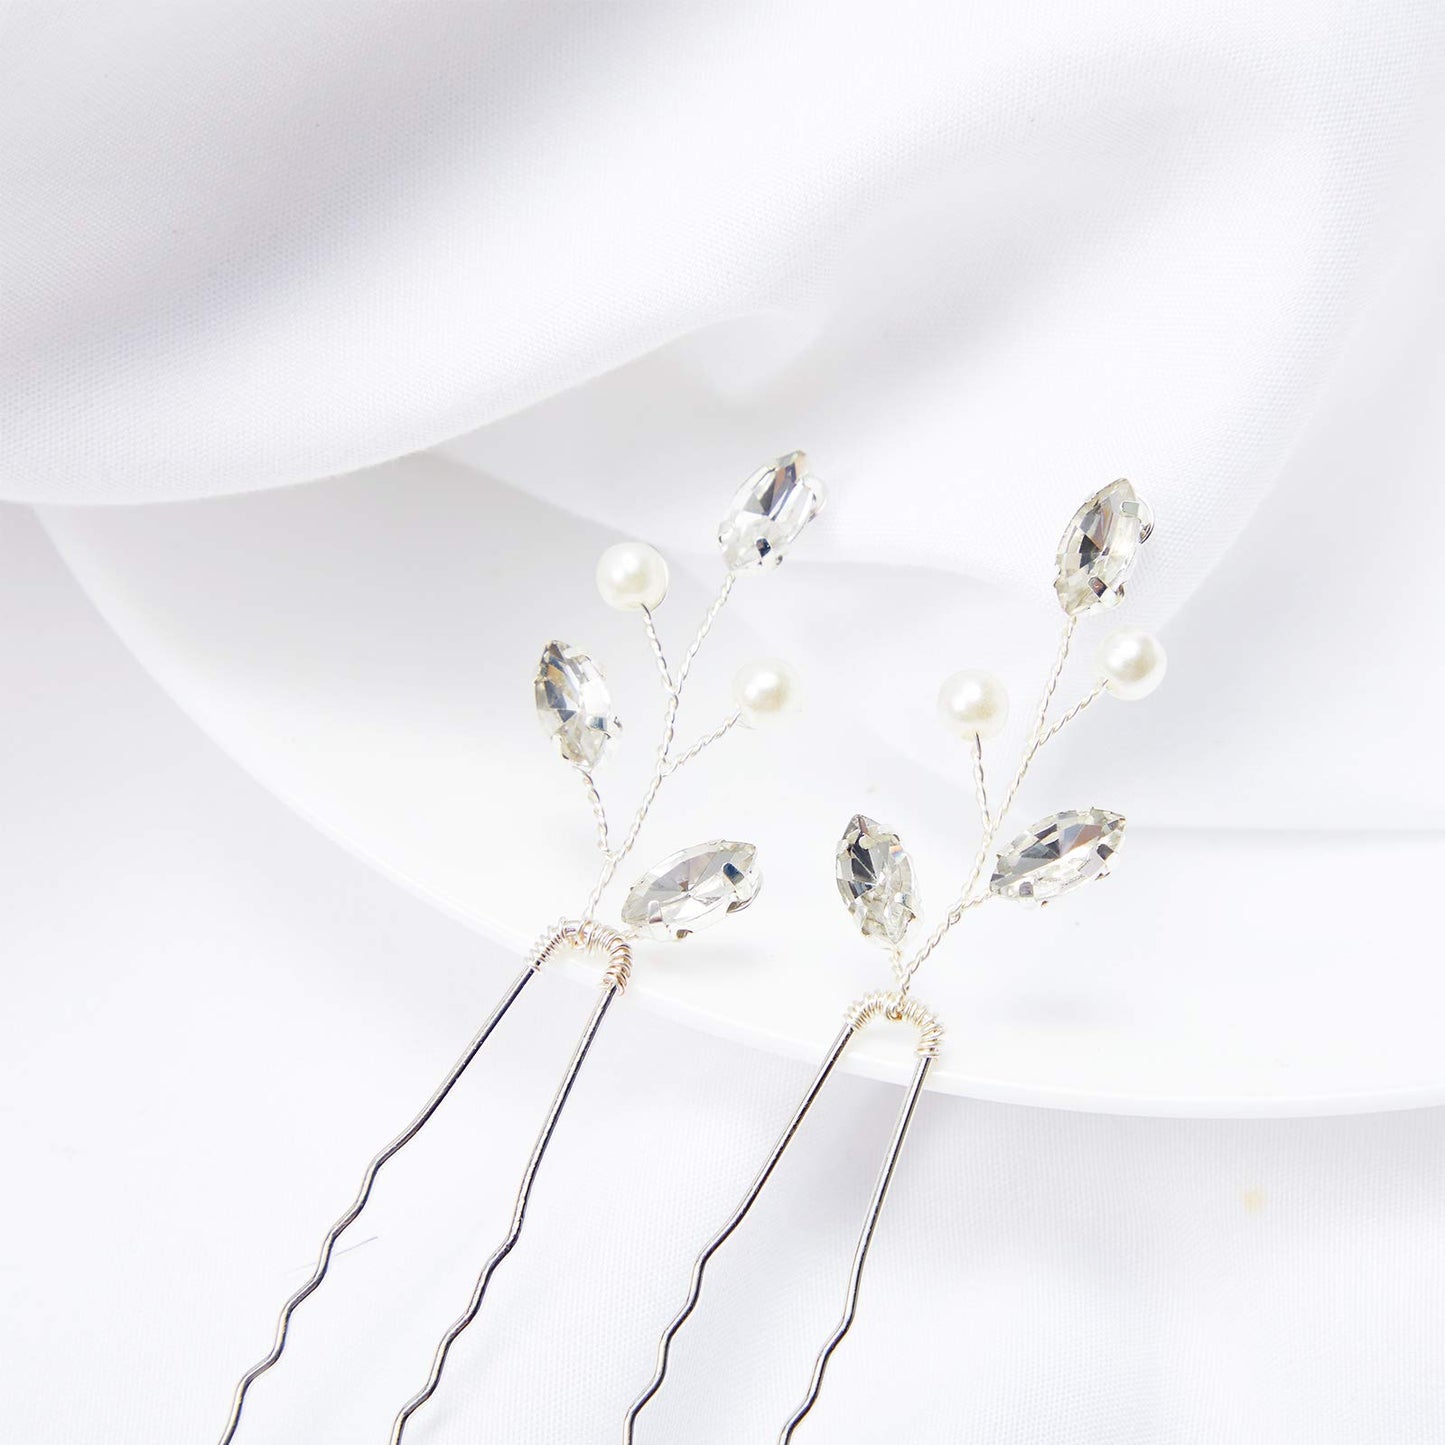 6 Pieces Pearl Crystal Bridal Hair Pins Rhinestone Flower Wedding Hair Piece Vintage Hair Accessory Party Hair Pins for Bride, Bridesmaids, Flower Girls (Silver)